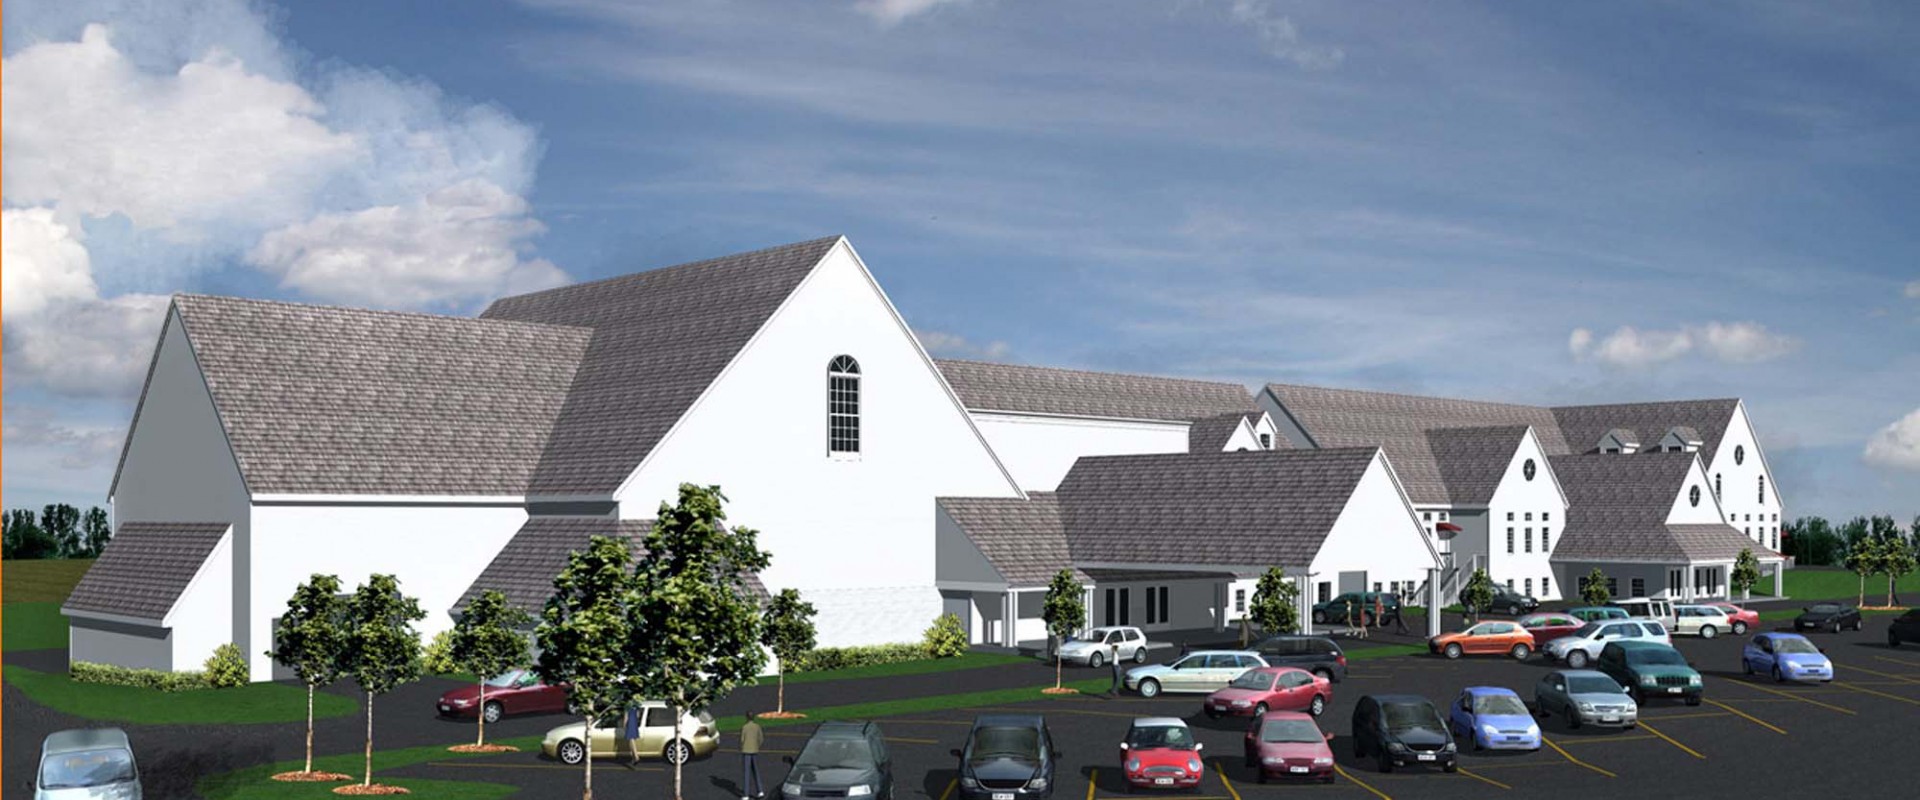 Architectural Church Master Plan